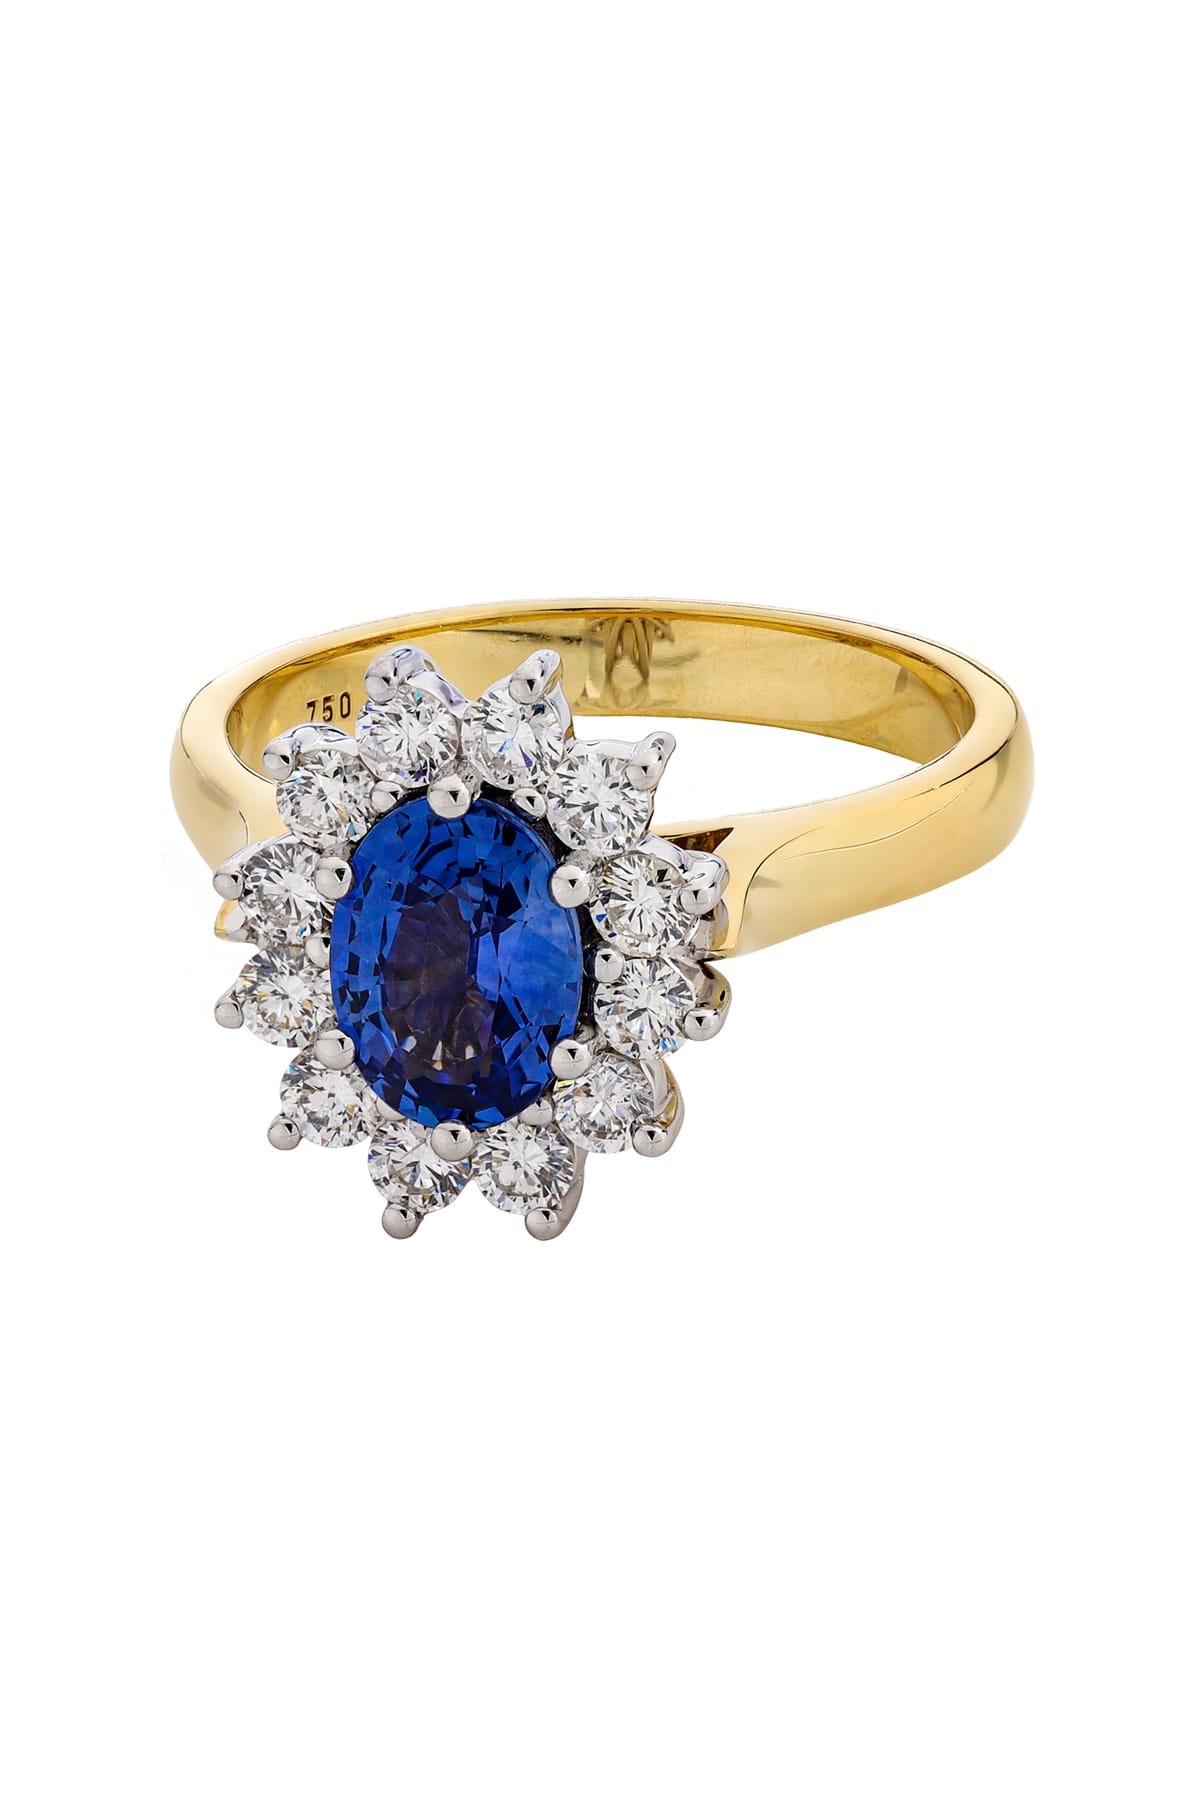 18 Carat Gold Ceylon Sapphire And Diamond Cluster Ring available at LeGassick Diamonds and Jewellery Gold Coast, Australia.